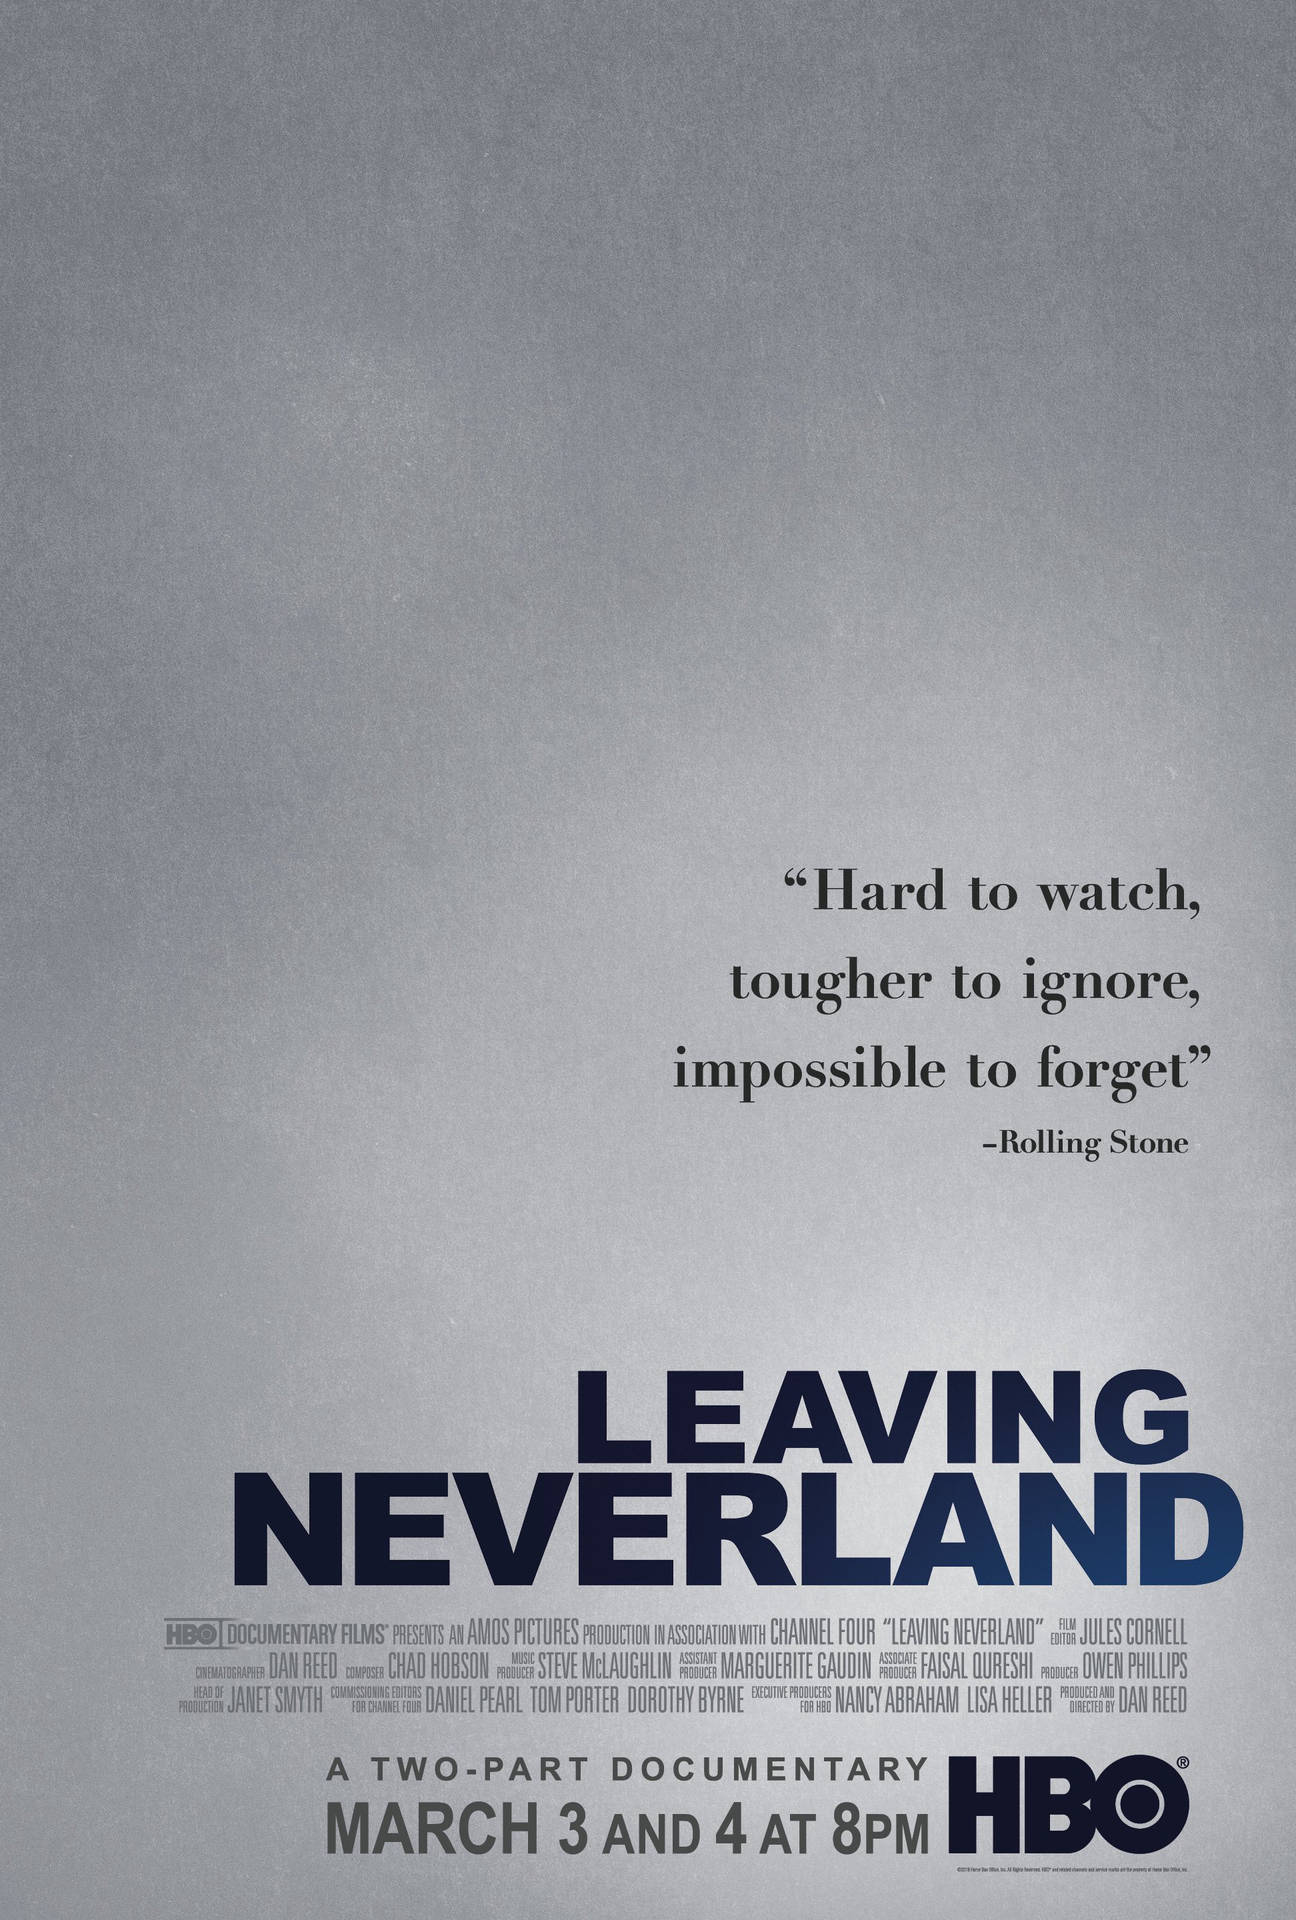 HBO Leaving Neverland Background